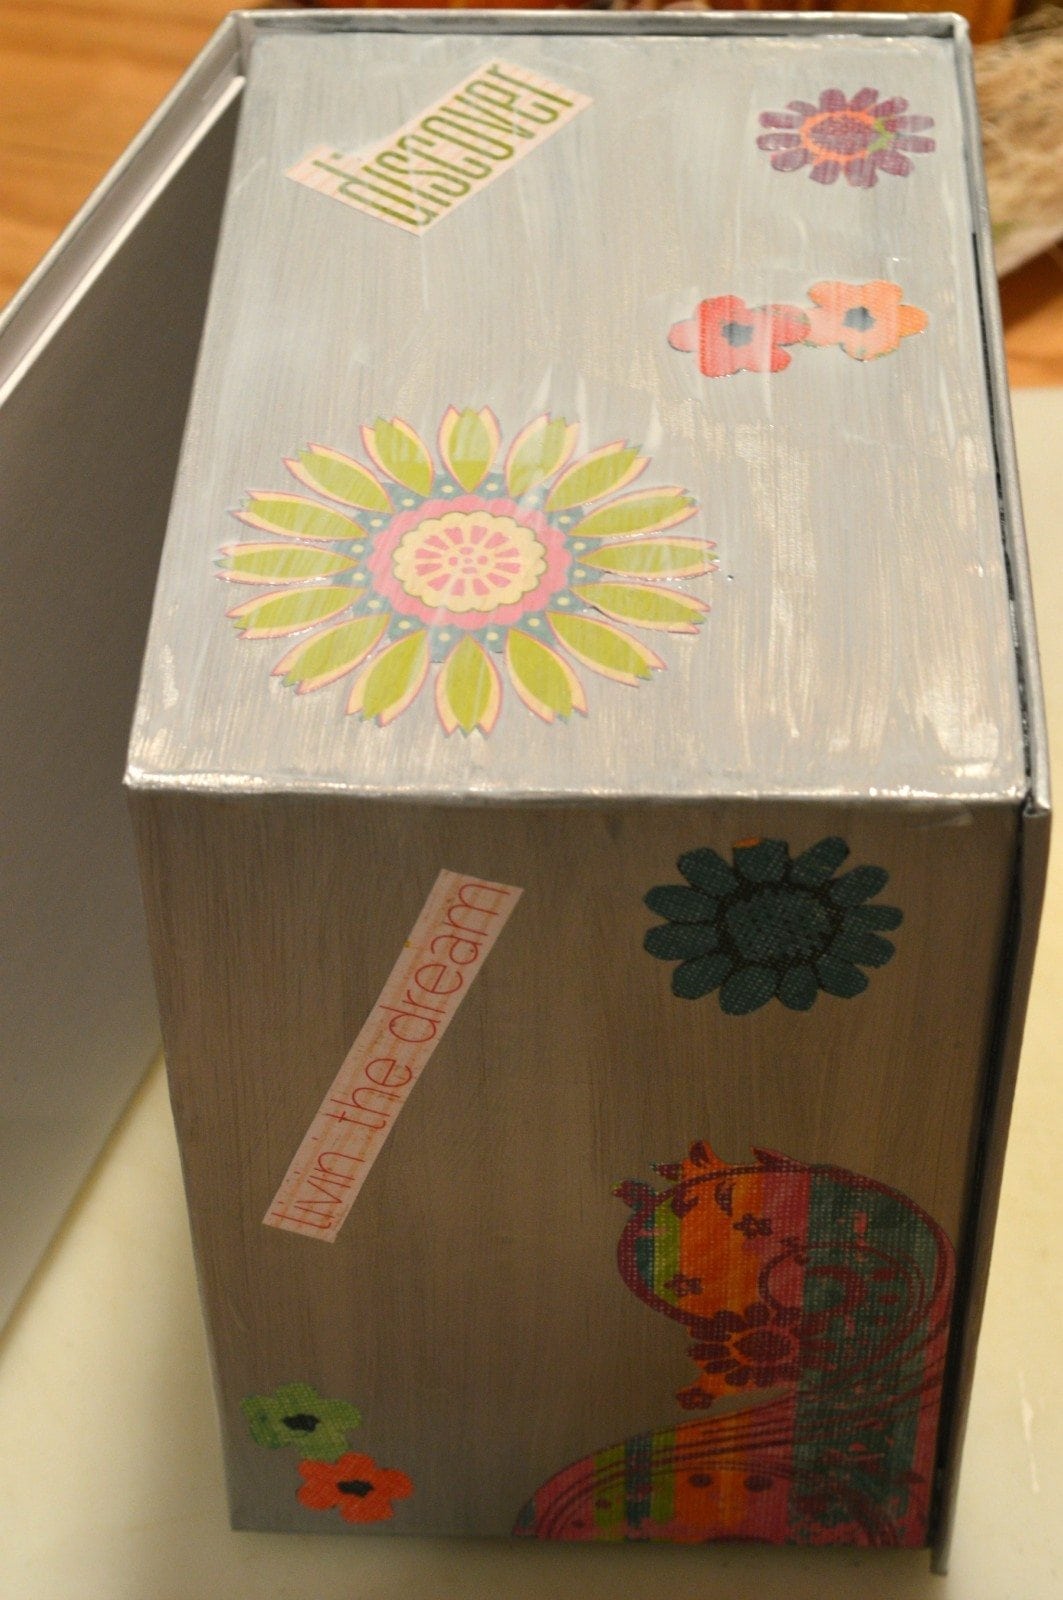 Handmade Card Box